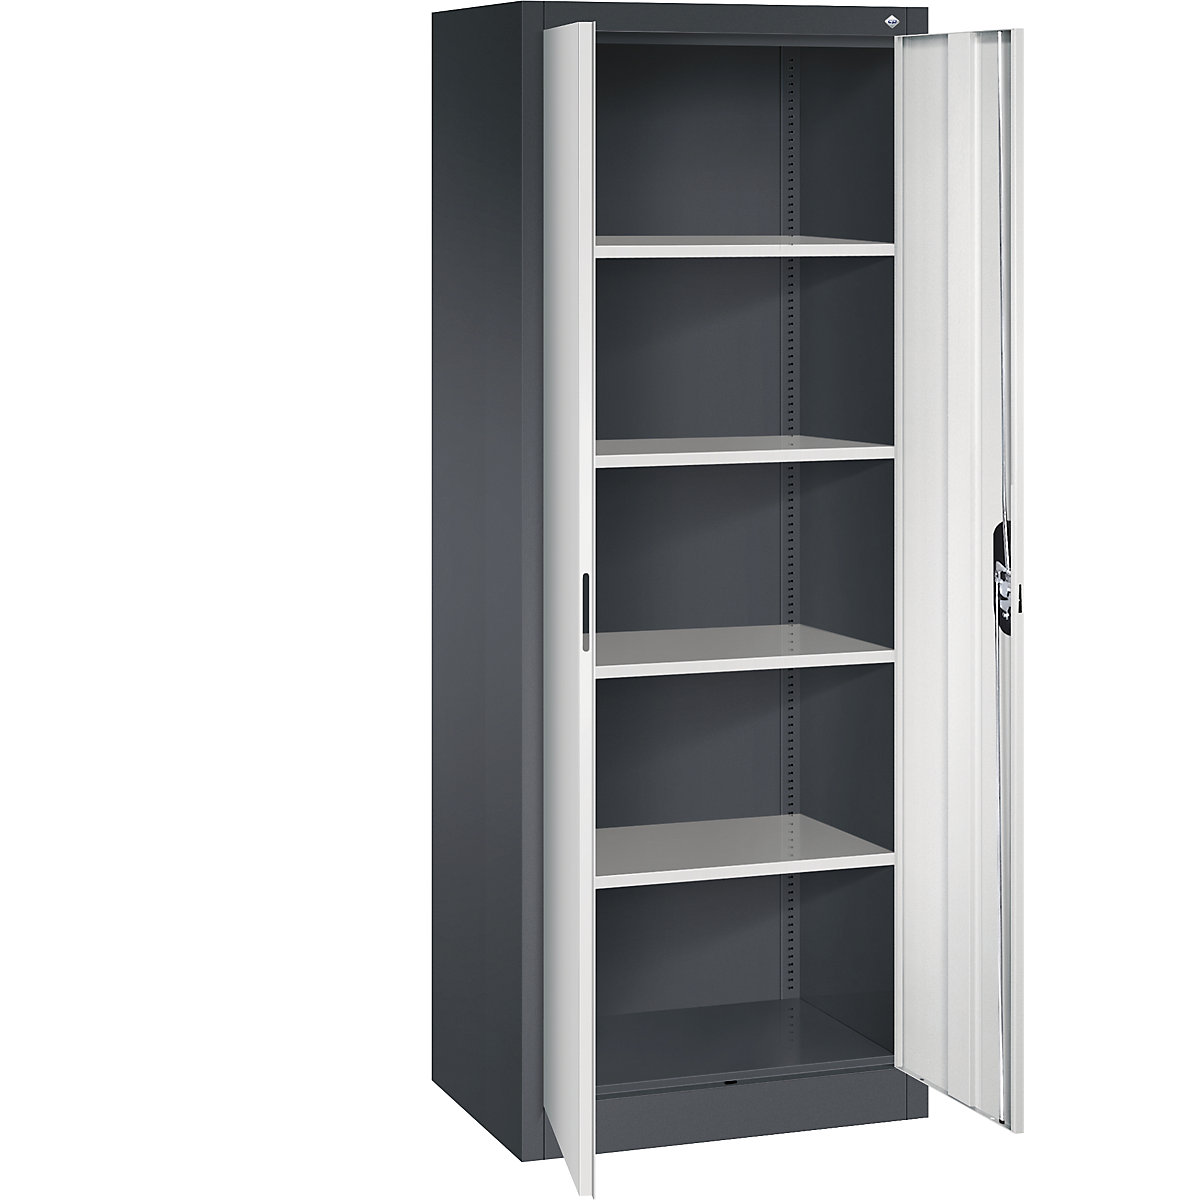 C+P – ACURADO universal cupboard, WxD 700 x 500 mm, black grey / light grey